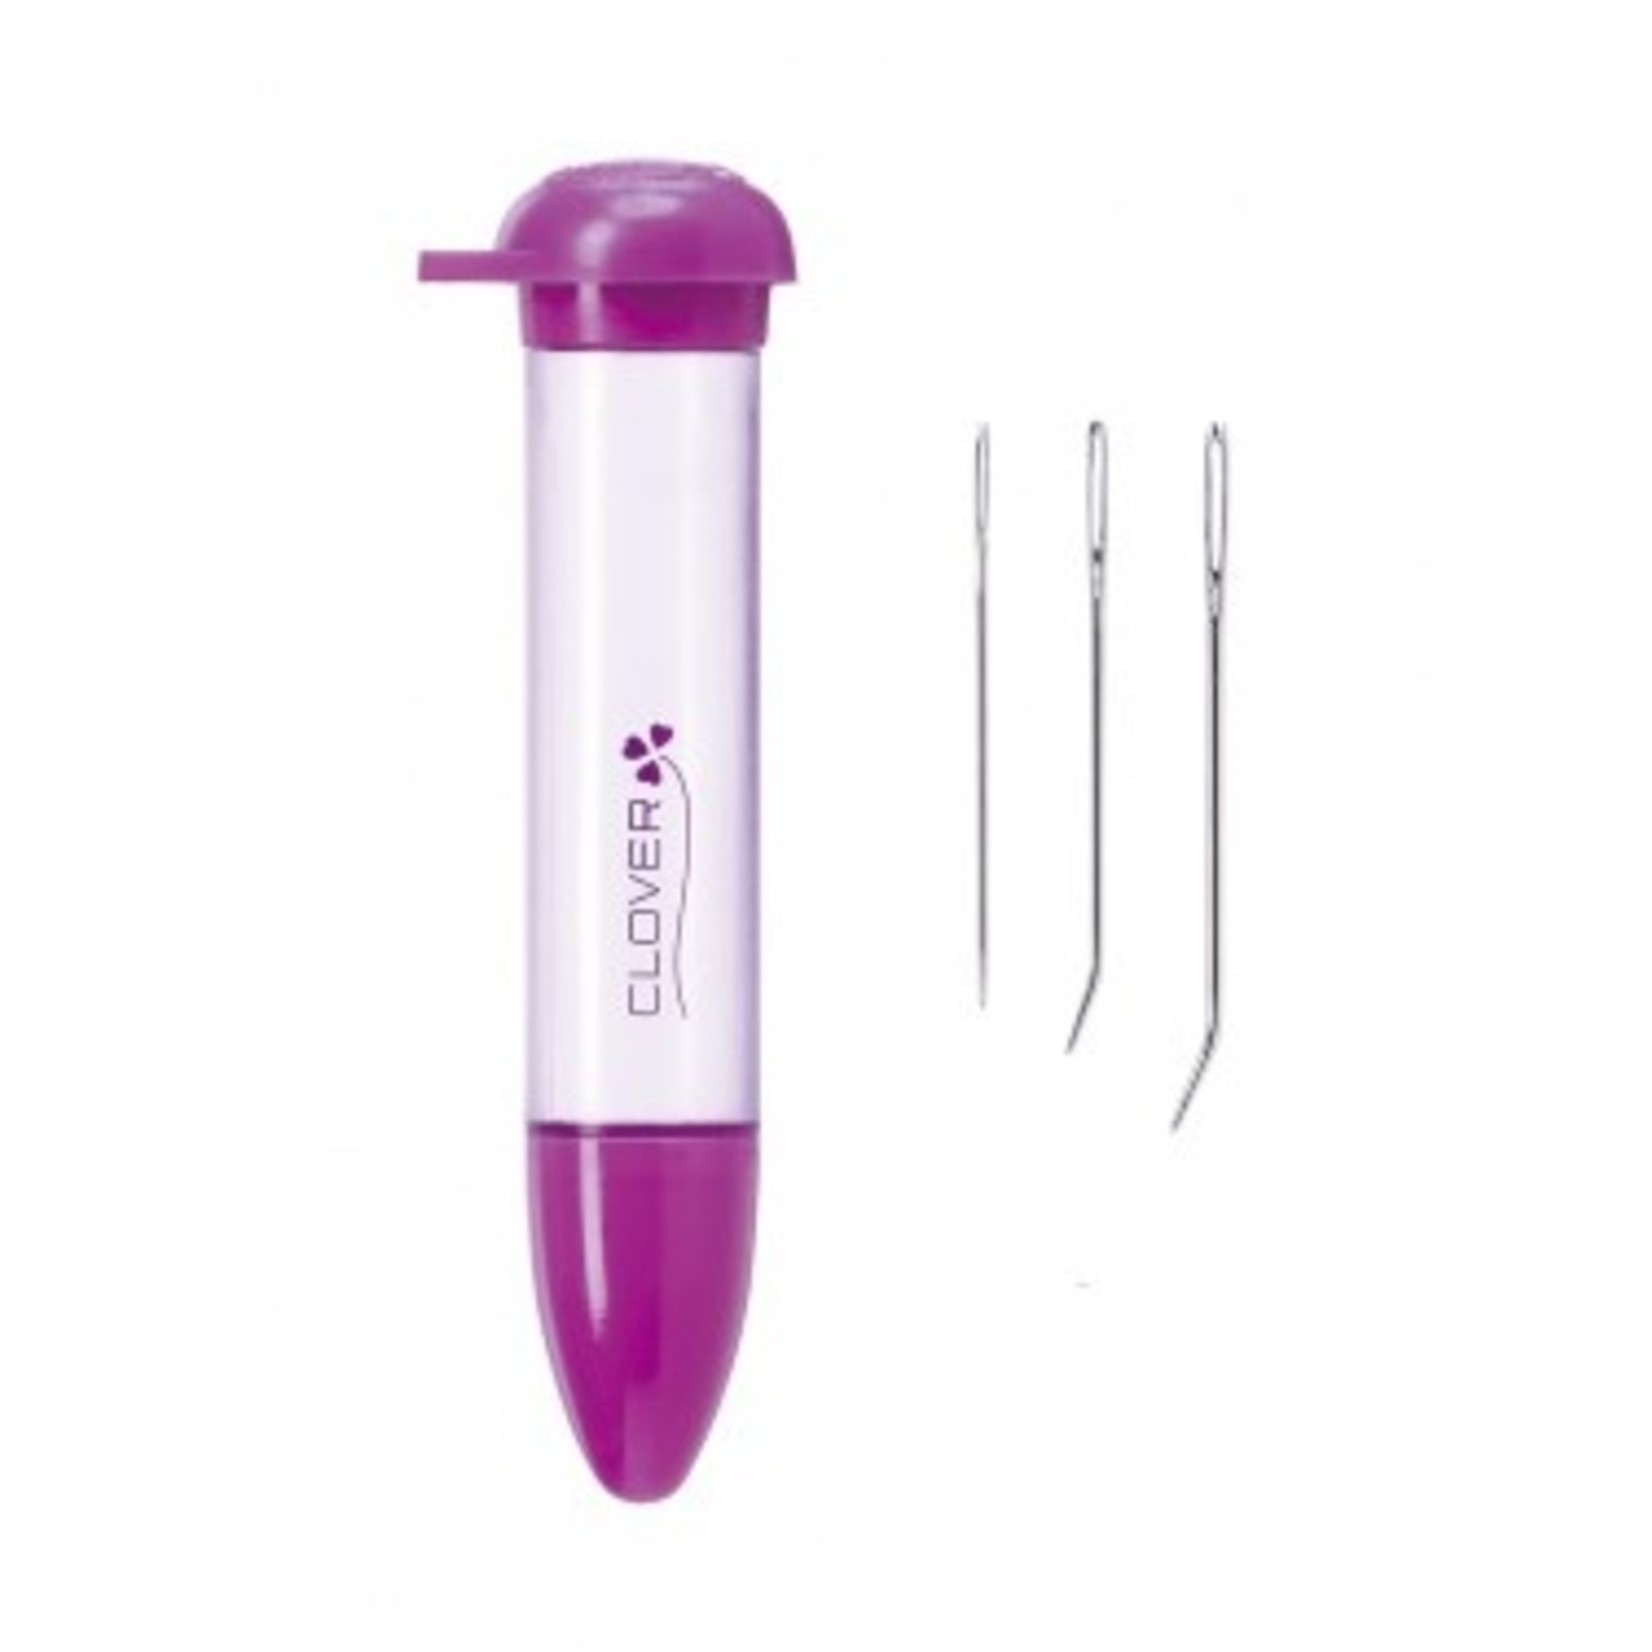 Clover Darning Needle Set: Lace/Purple